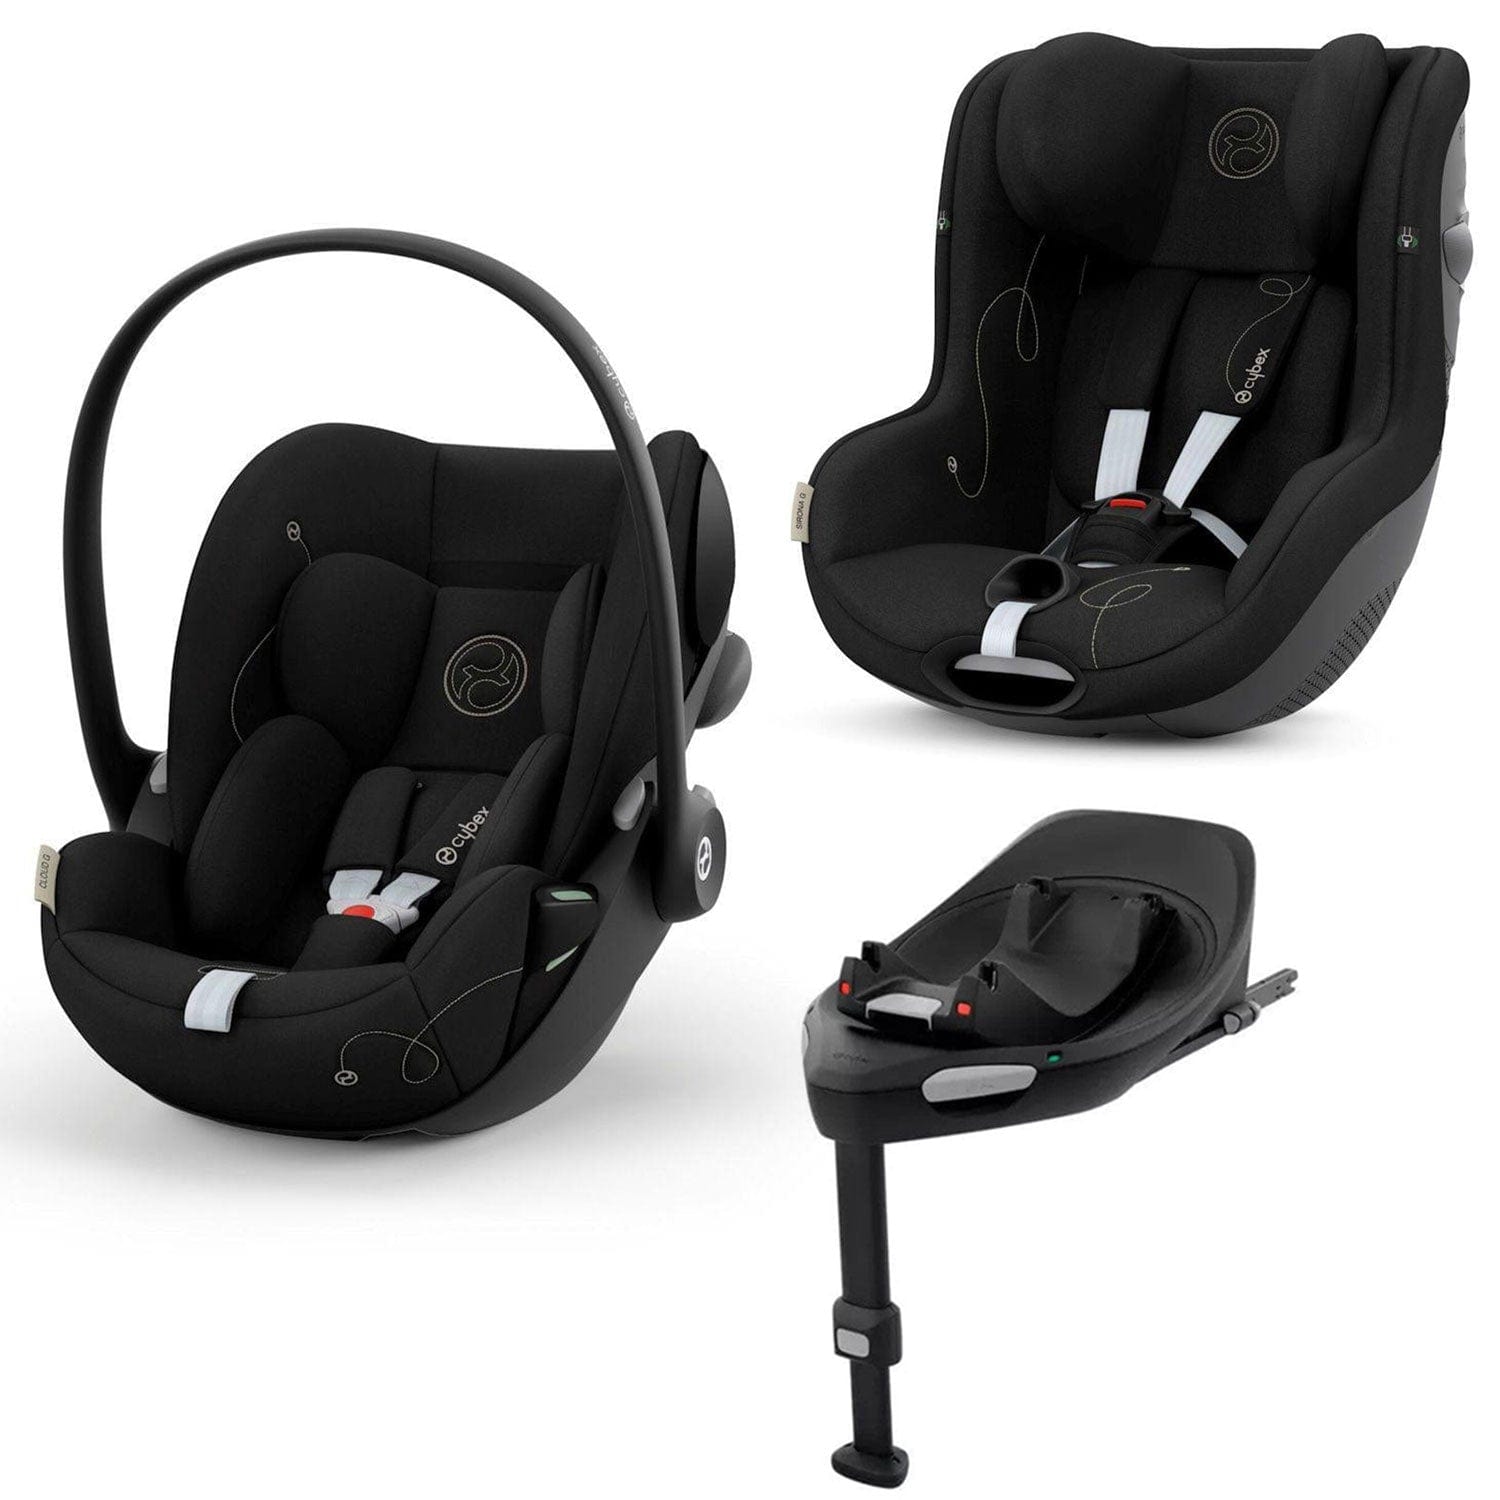 Cybex baby car seats Cybex G i-Size Car Seat Bundle - Moon Black 15302-MOO-BLK